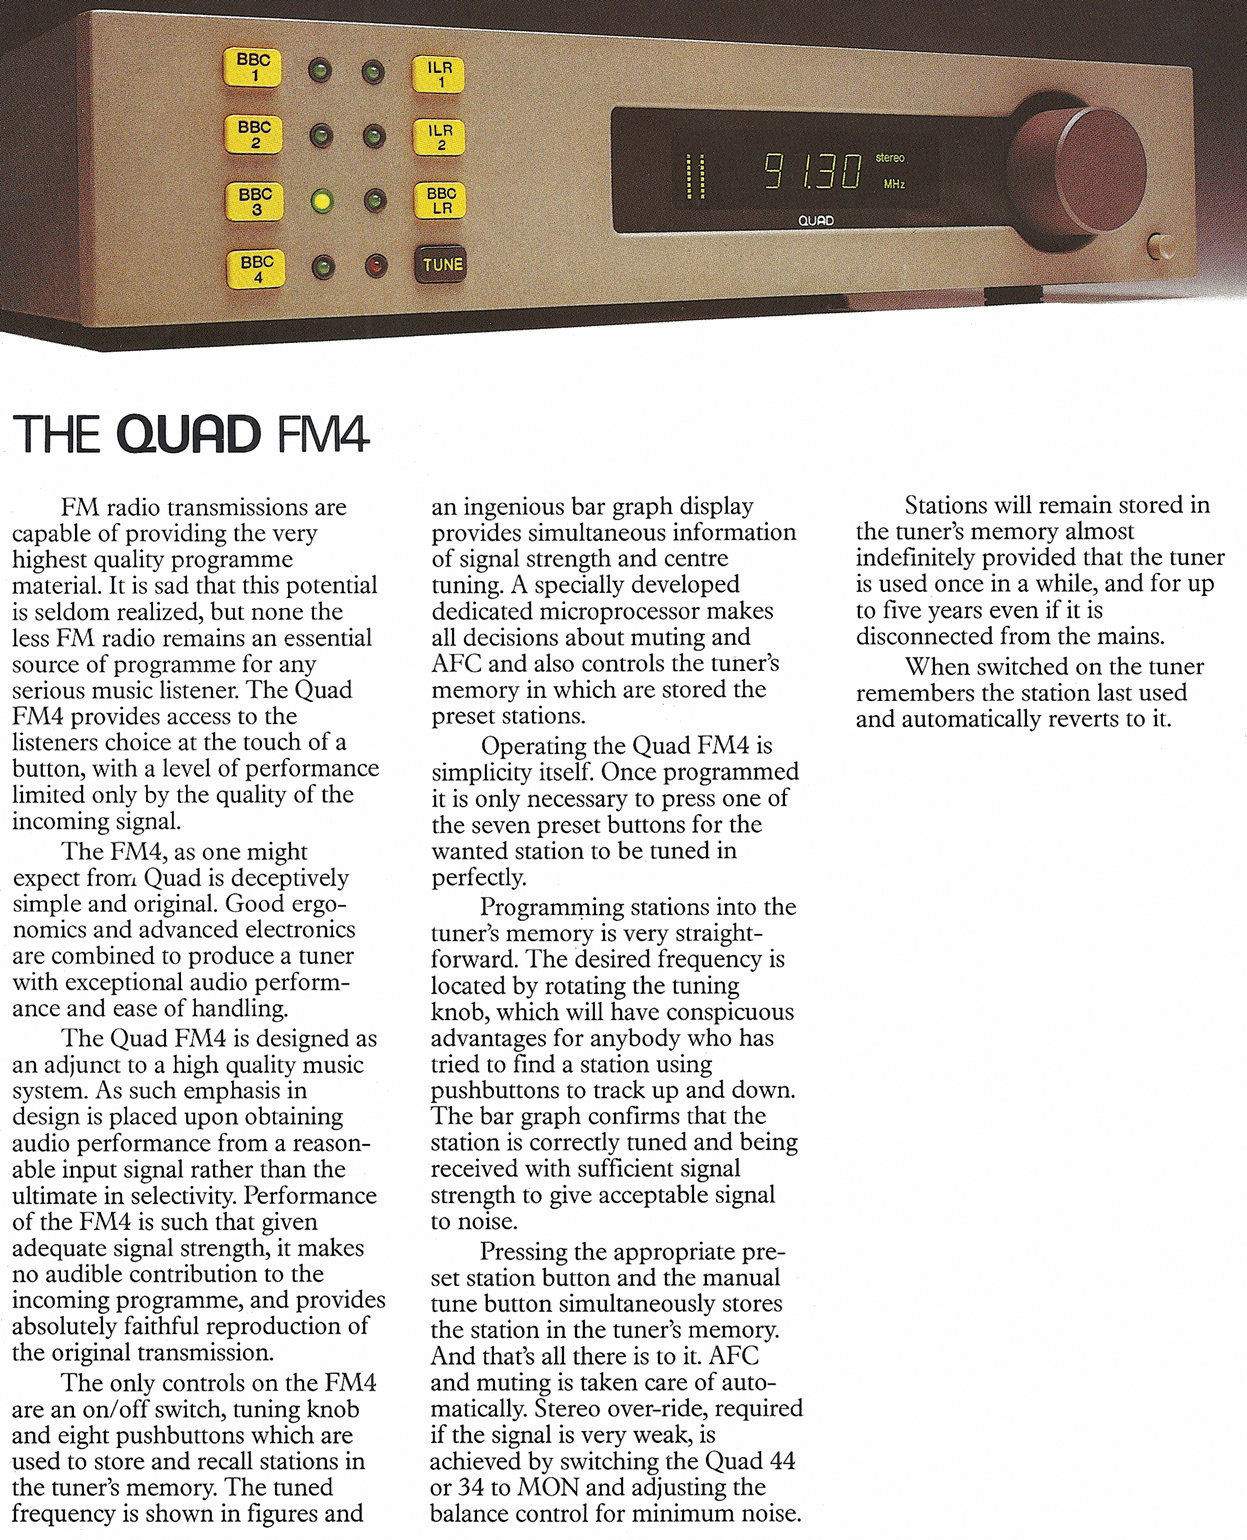 Quad FM 4-Prospekt-1983.jpg